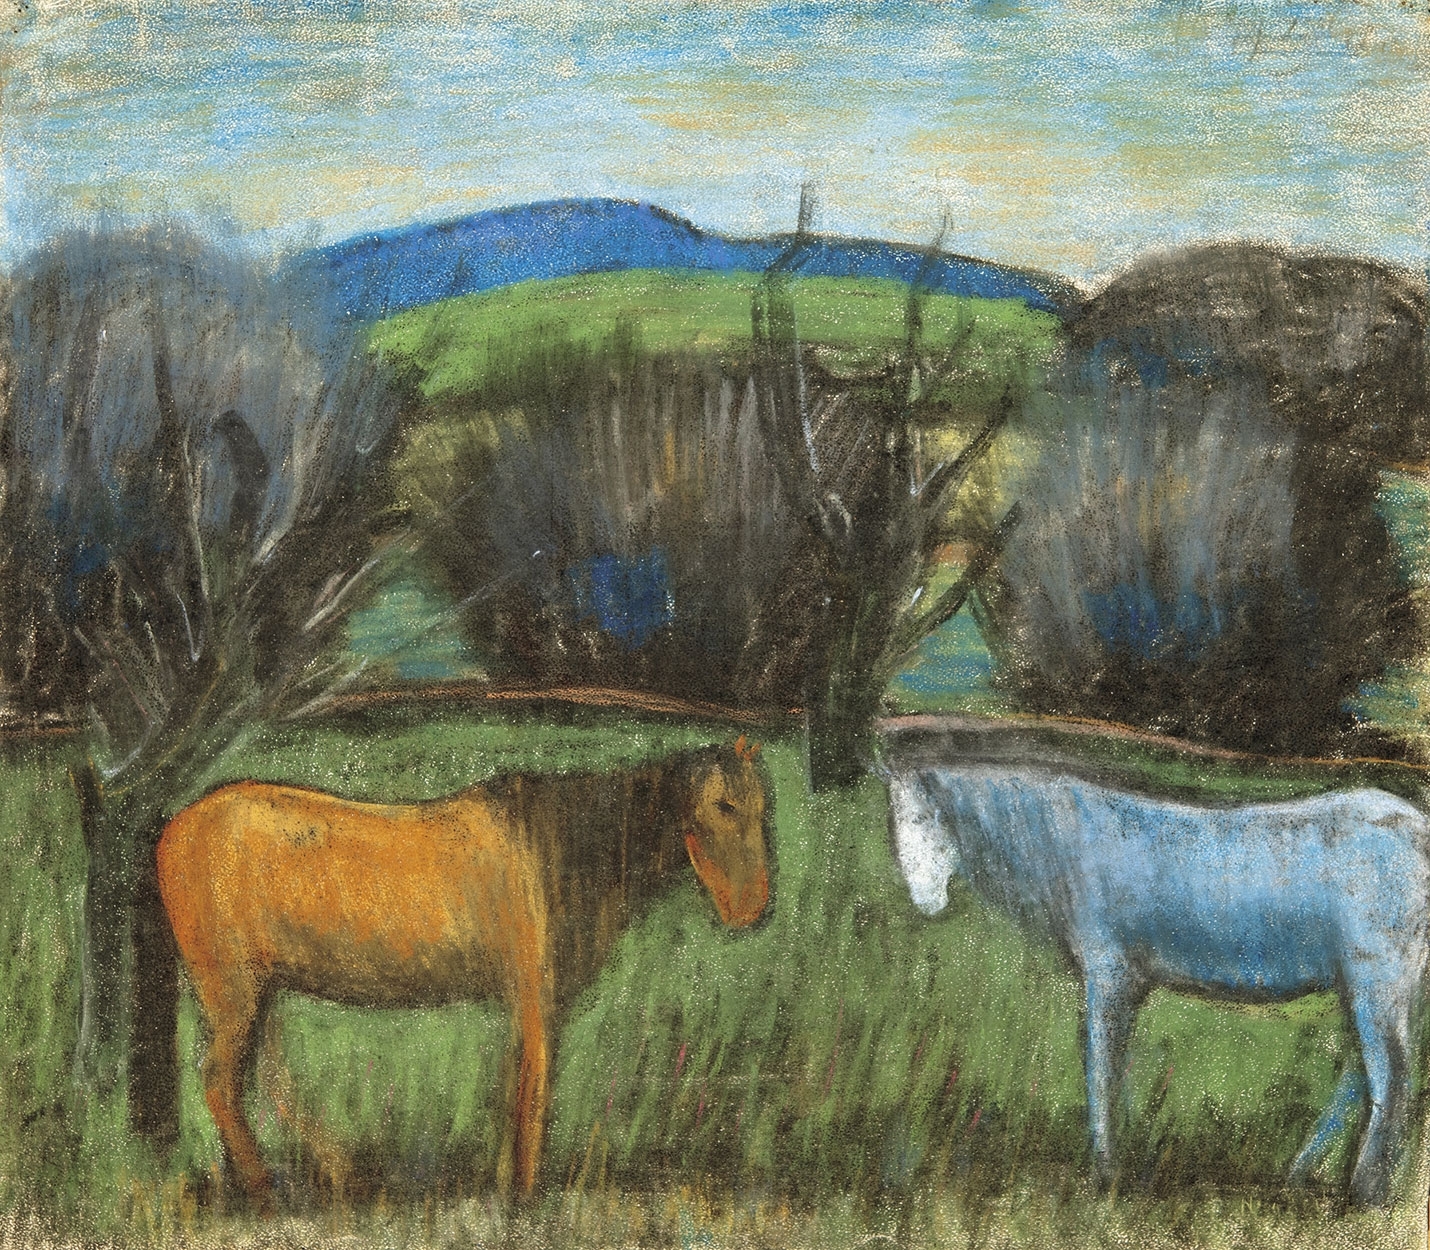 Nagy István (1873-1937) Pit Ponies (Landscape with Horses), around 1928